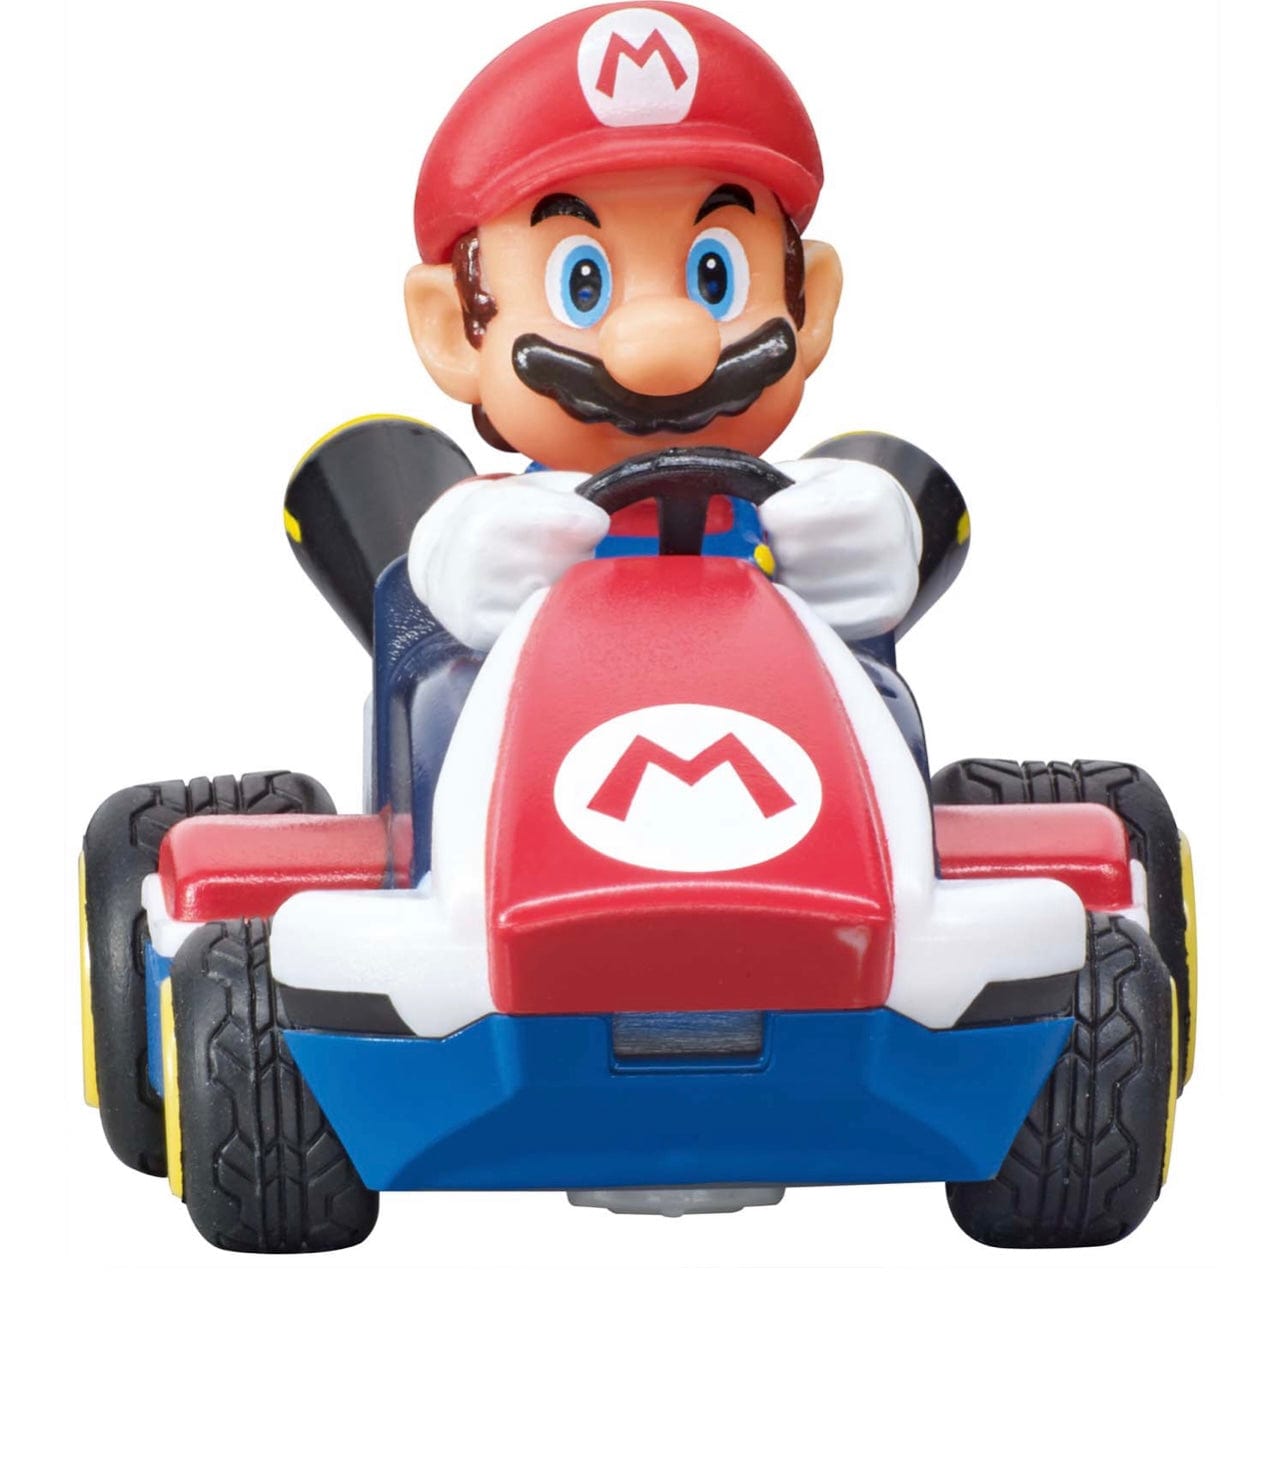 Official Nintendo Super Mario Toy 2.4GHz Mario Kart (TM) Mini RC - Mario